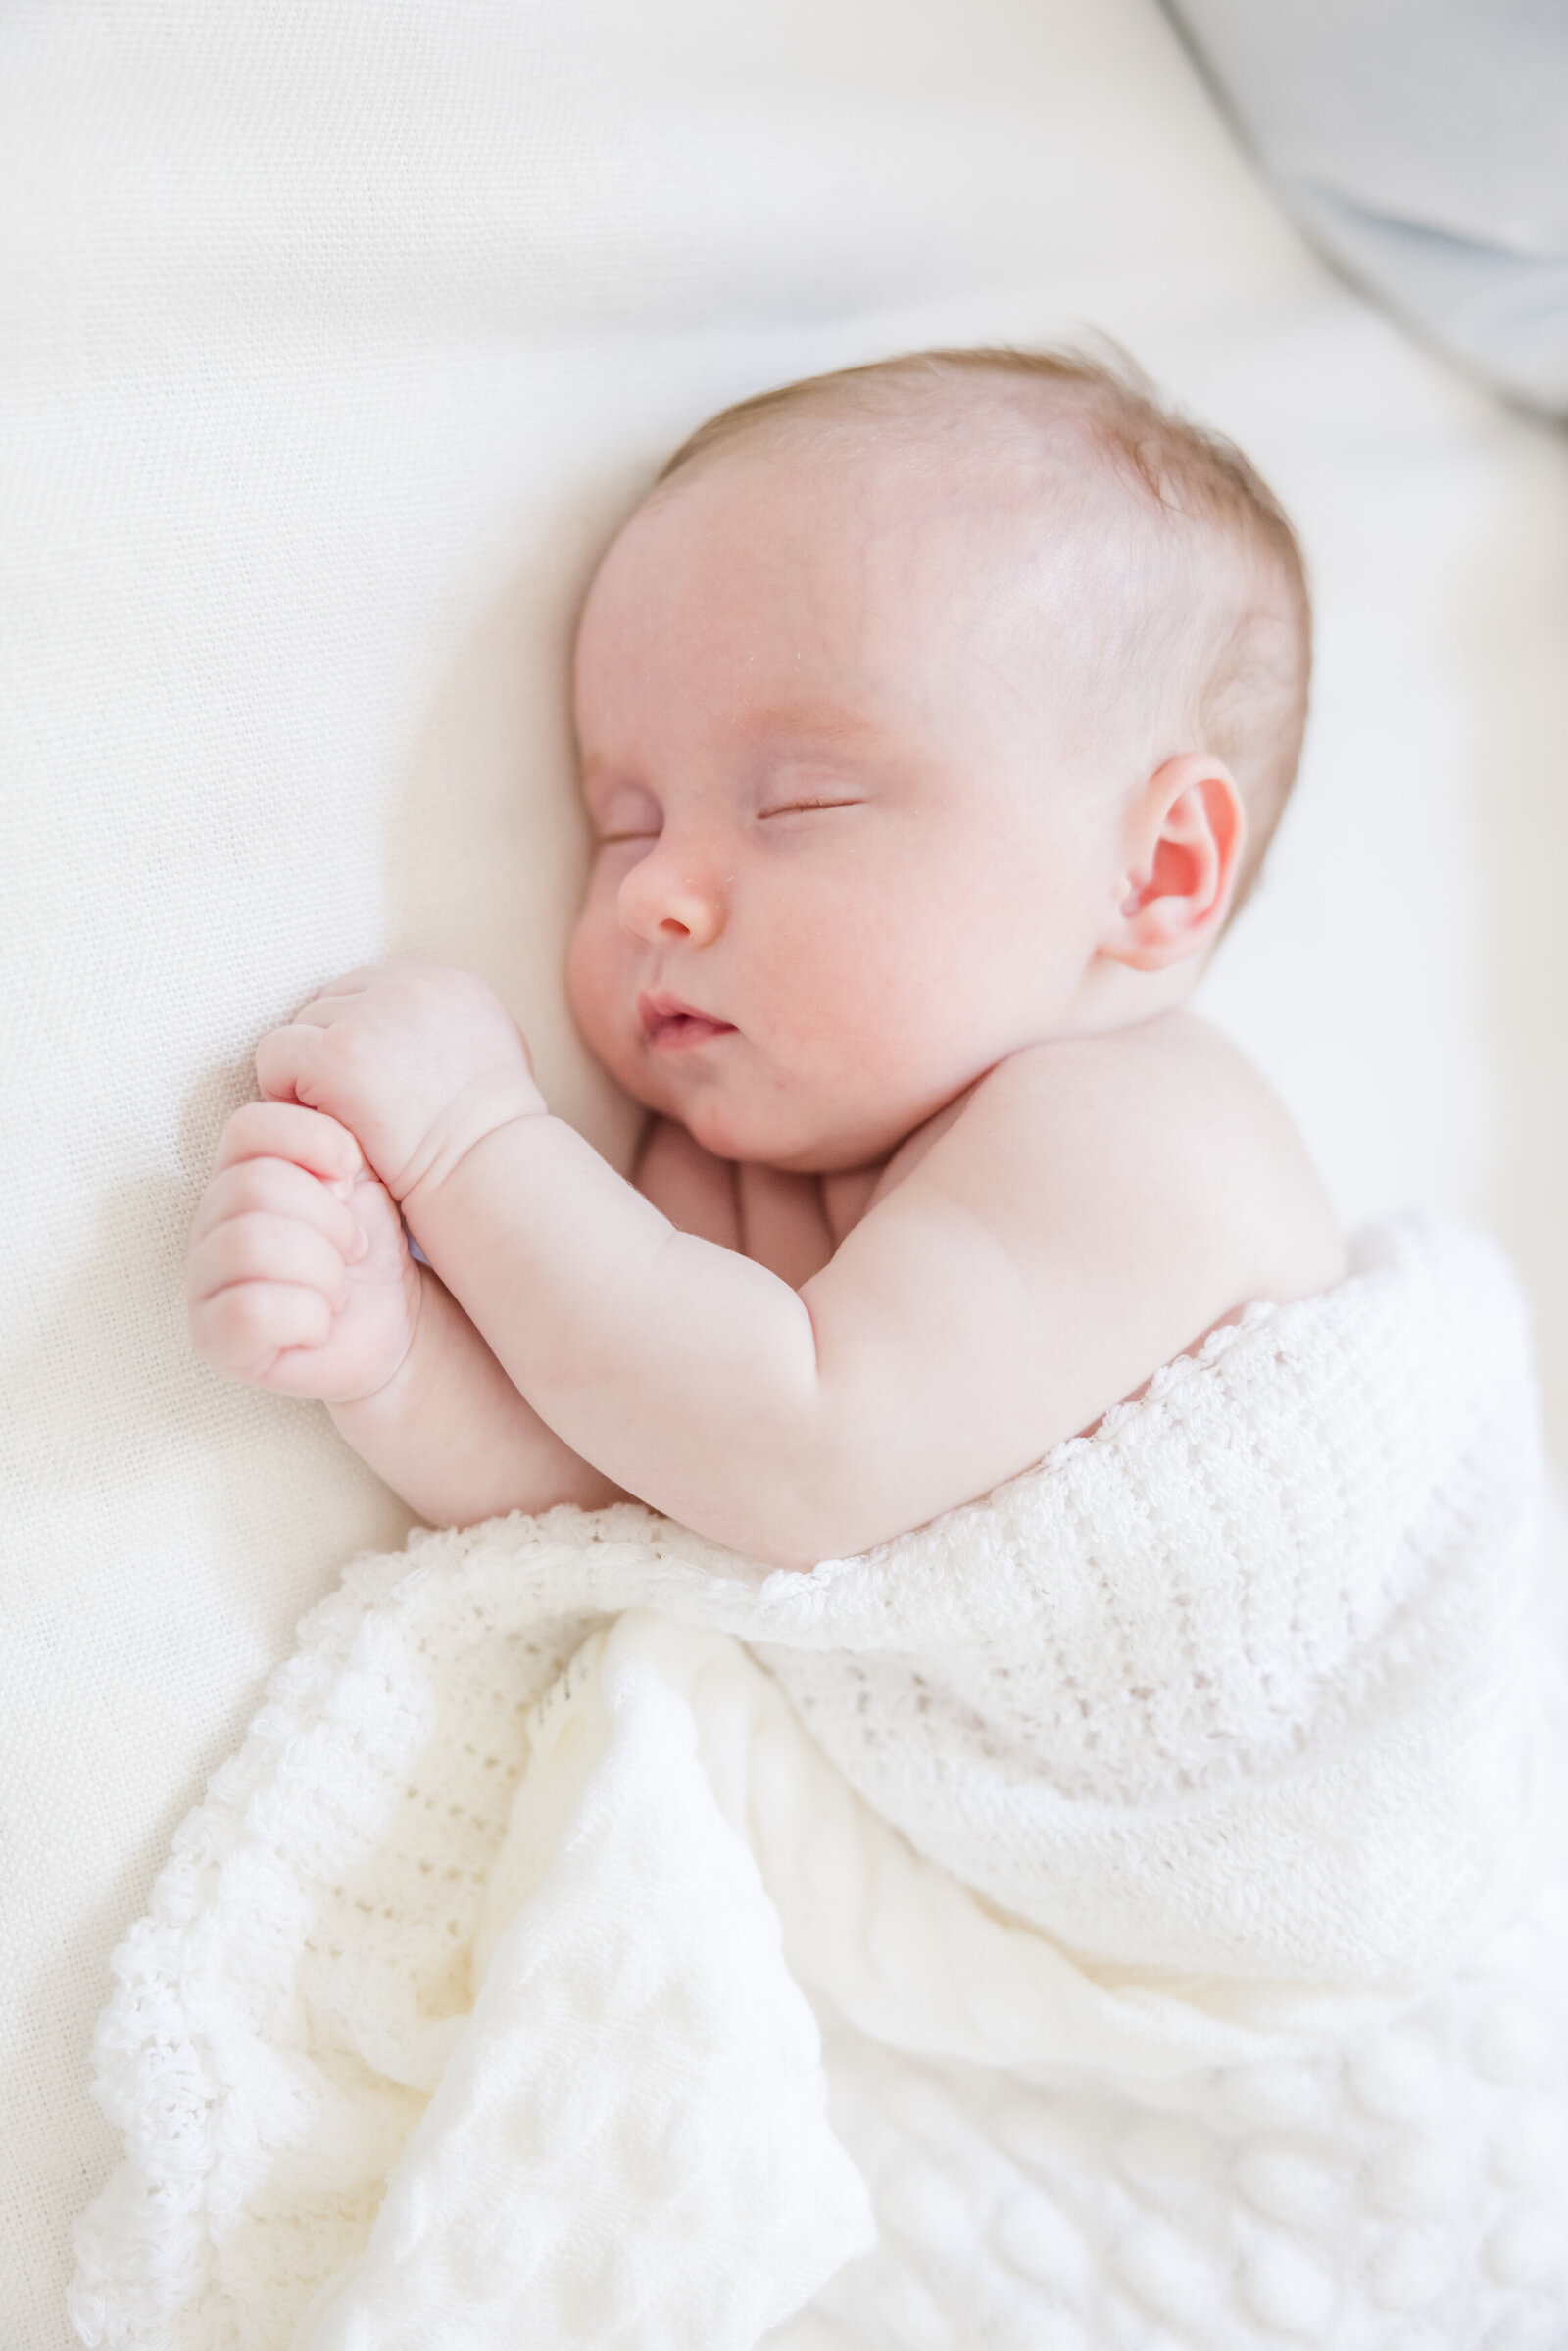 Newborn baby asleep covered by white blanket.